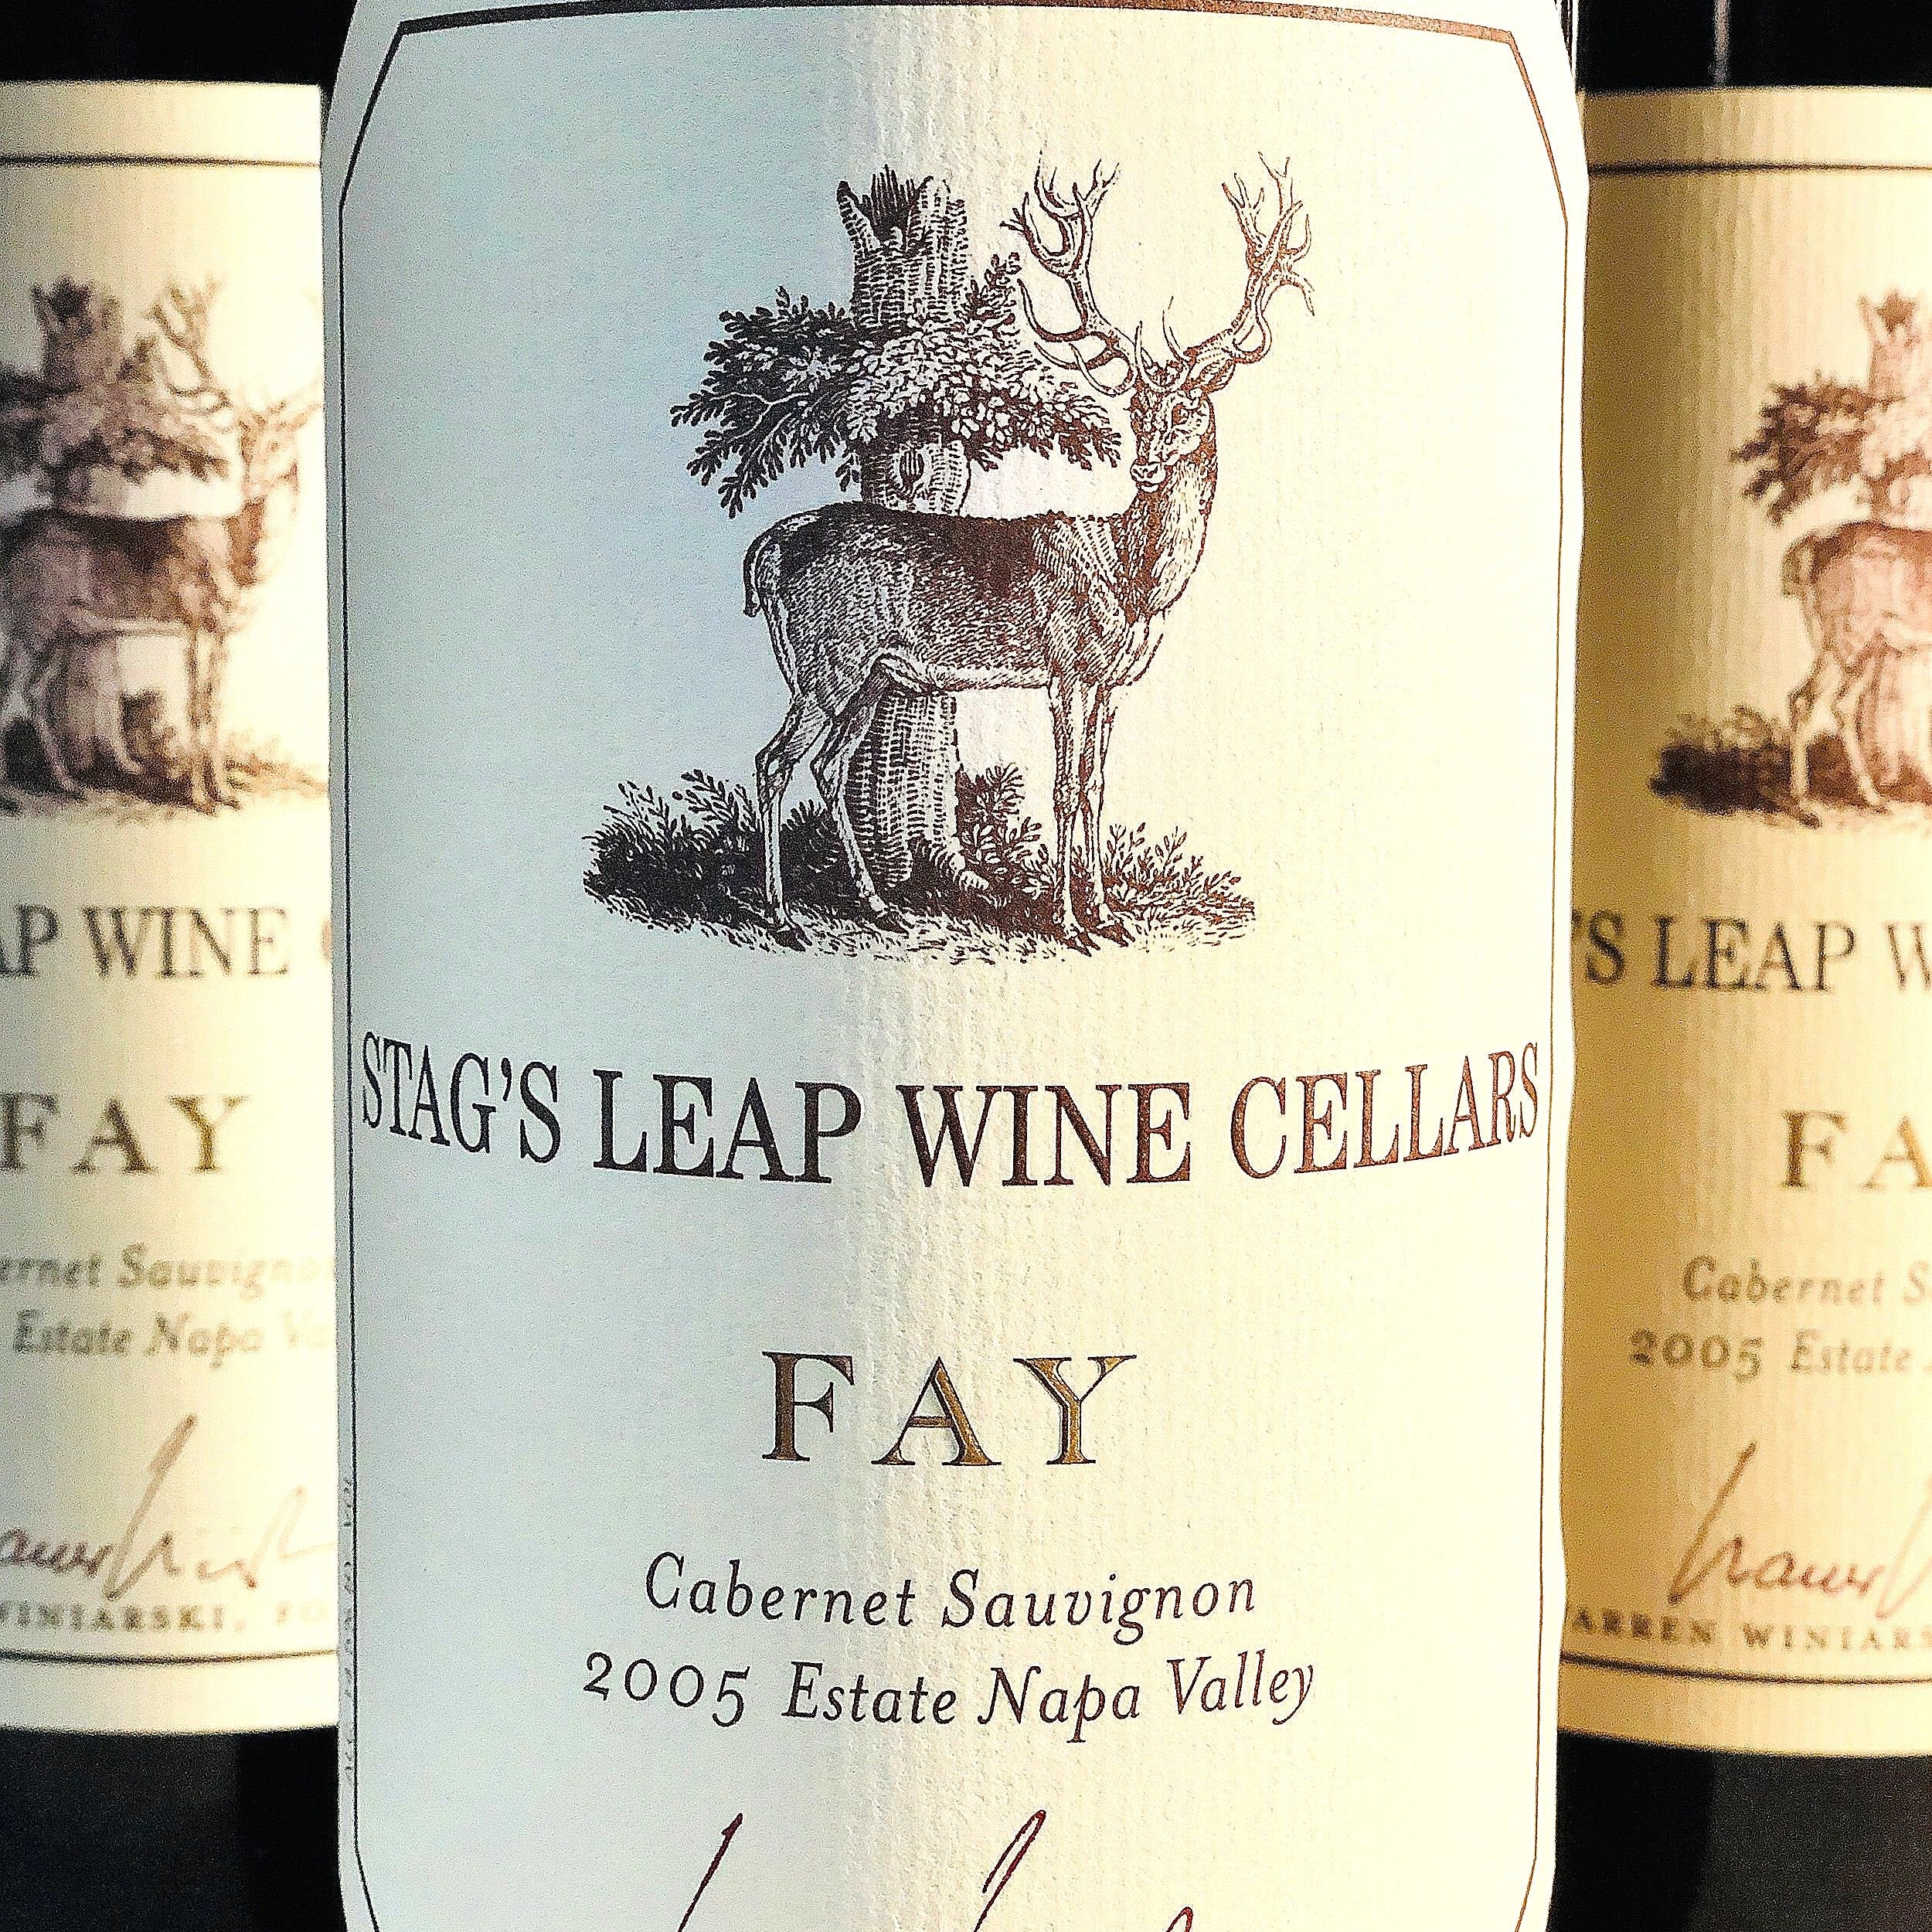 Stag's Leap Wine Cellars, Napa Valley, Fay Vineyard, Cabernet Sauvignon 2005